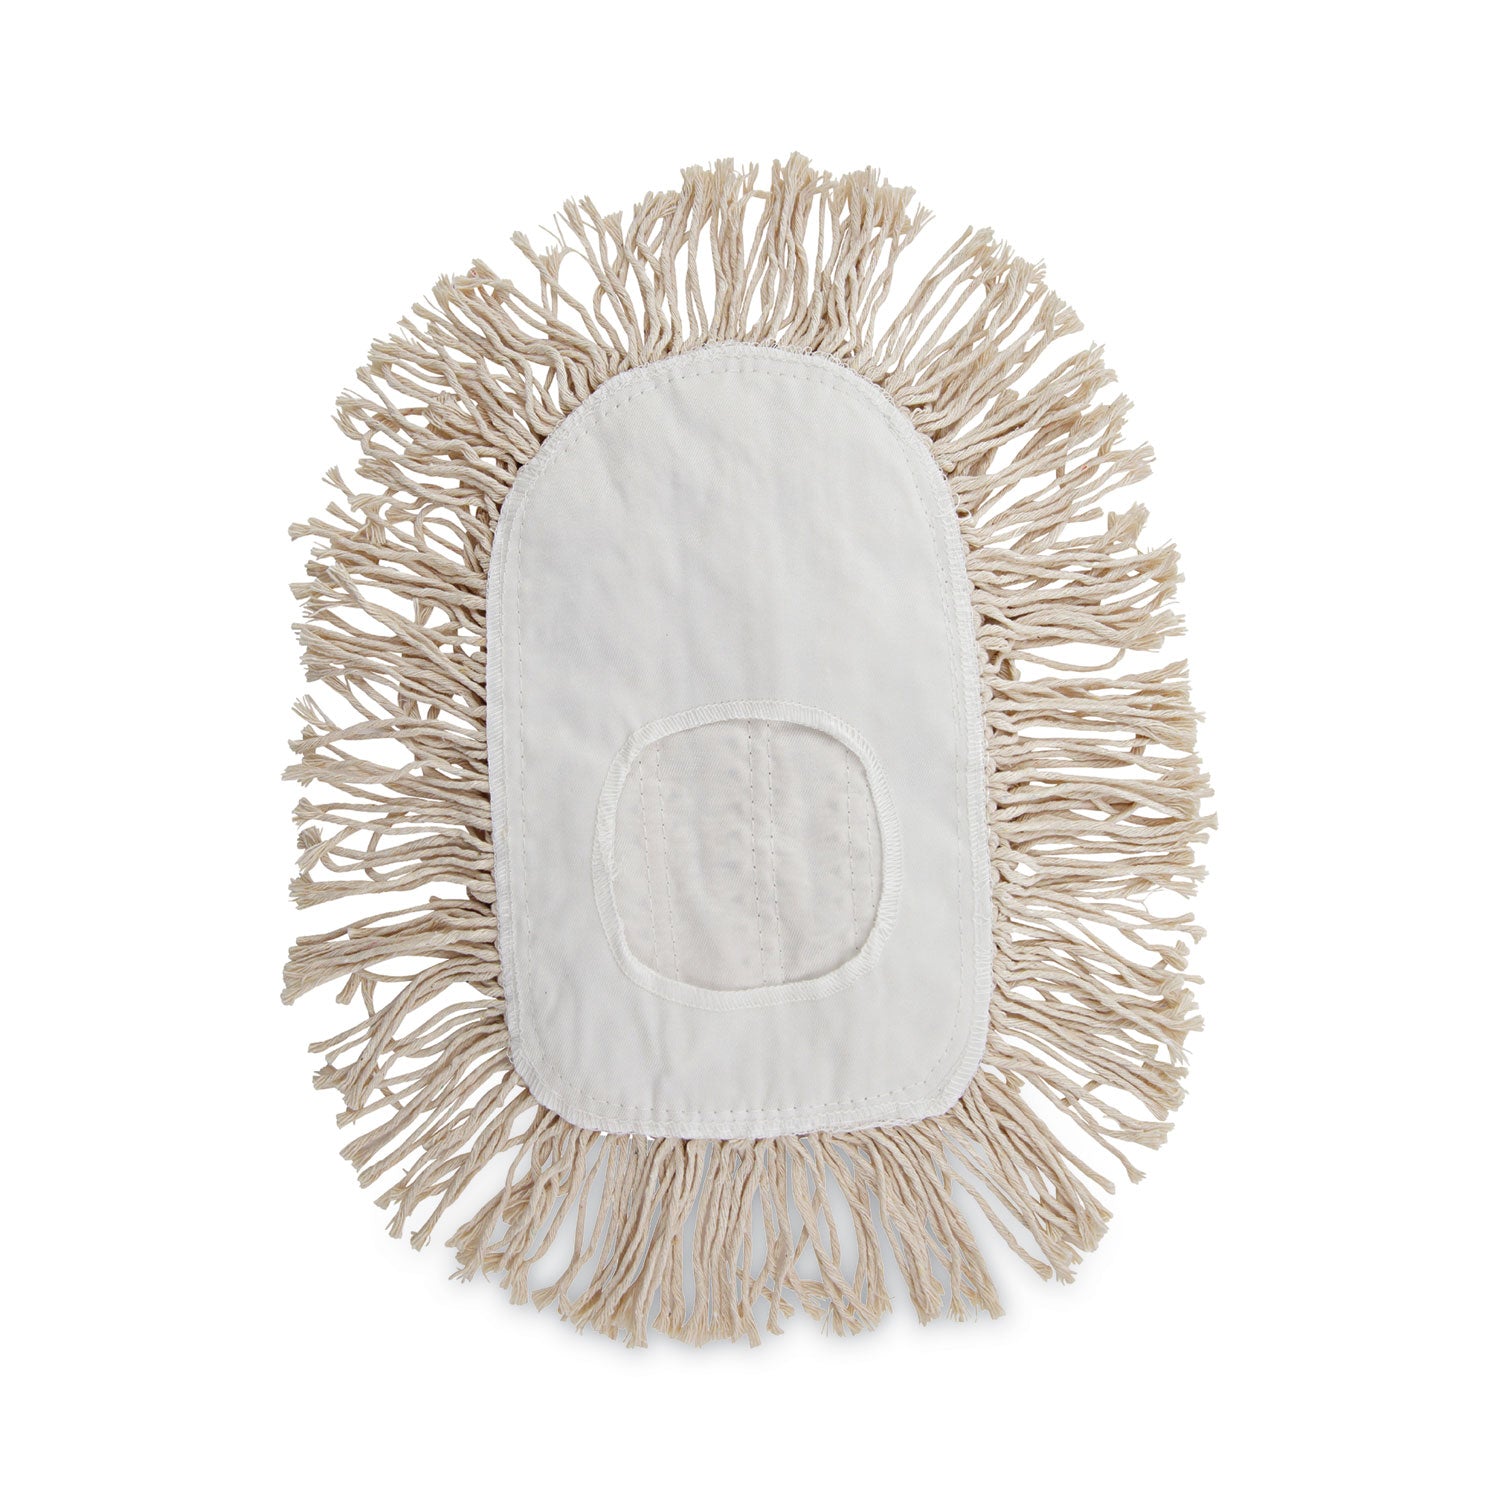 Wedge Dust Mop Head, Cotton, 17.5 x 13.5, White - 